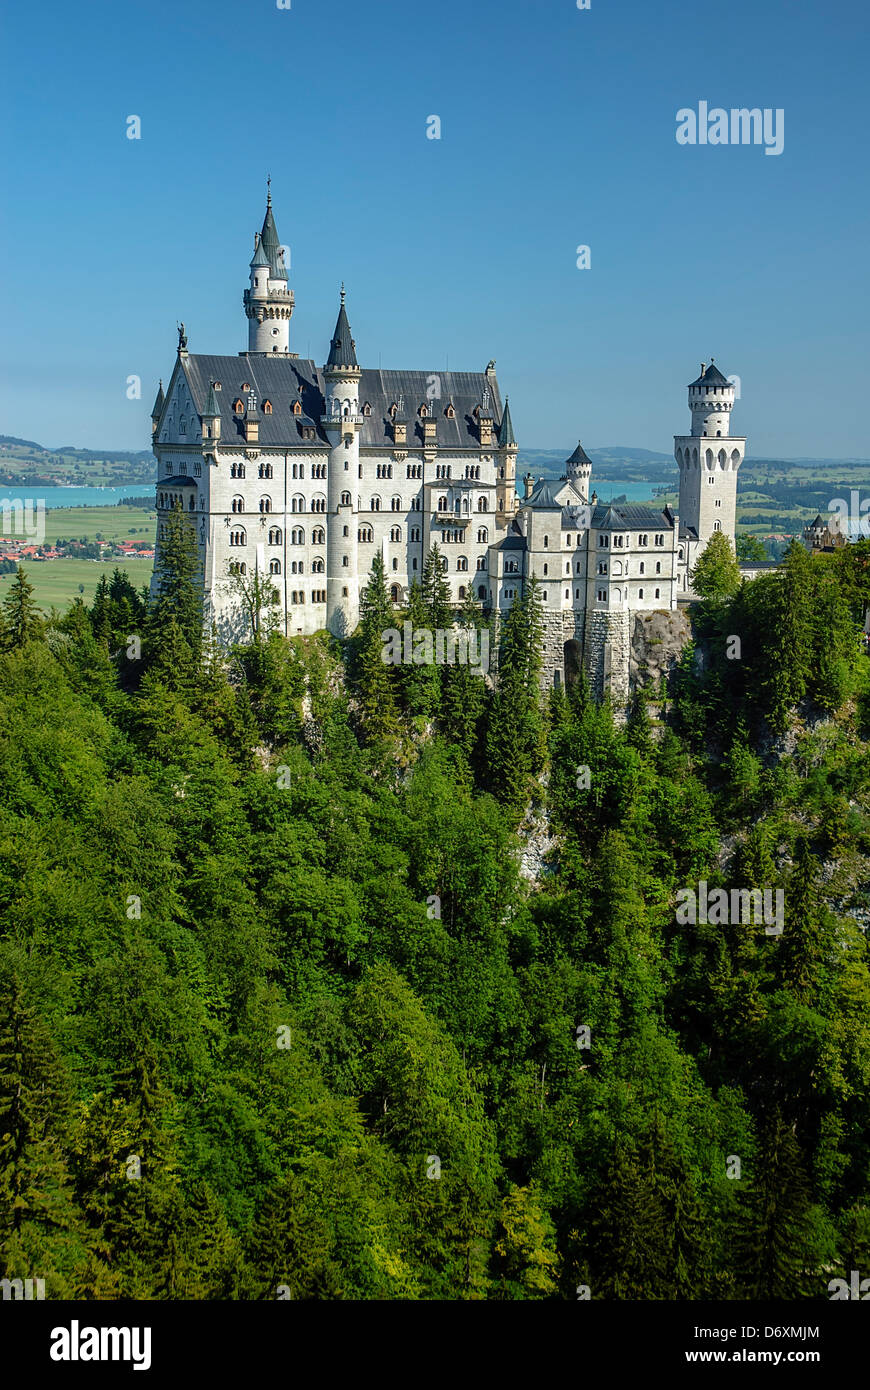 Neuschwanstein Castle was built by King Ludwig II, Fuessen, Schwangau, Allgaeu, Bavaria, Germany Image taken from public ground Stock Photo